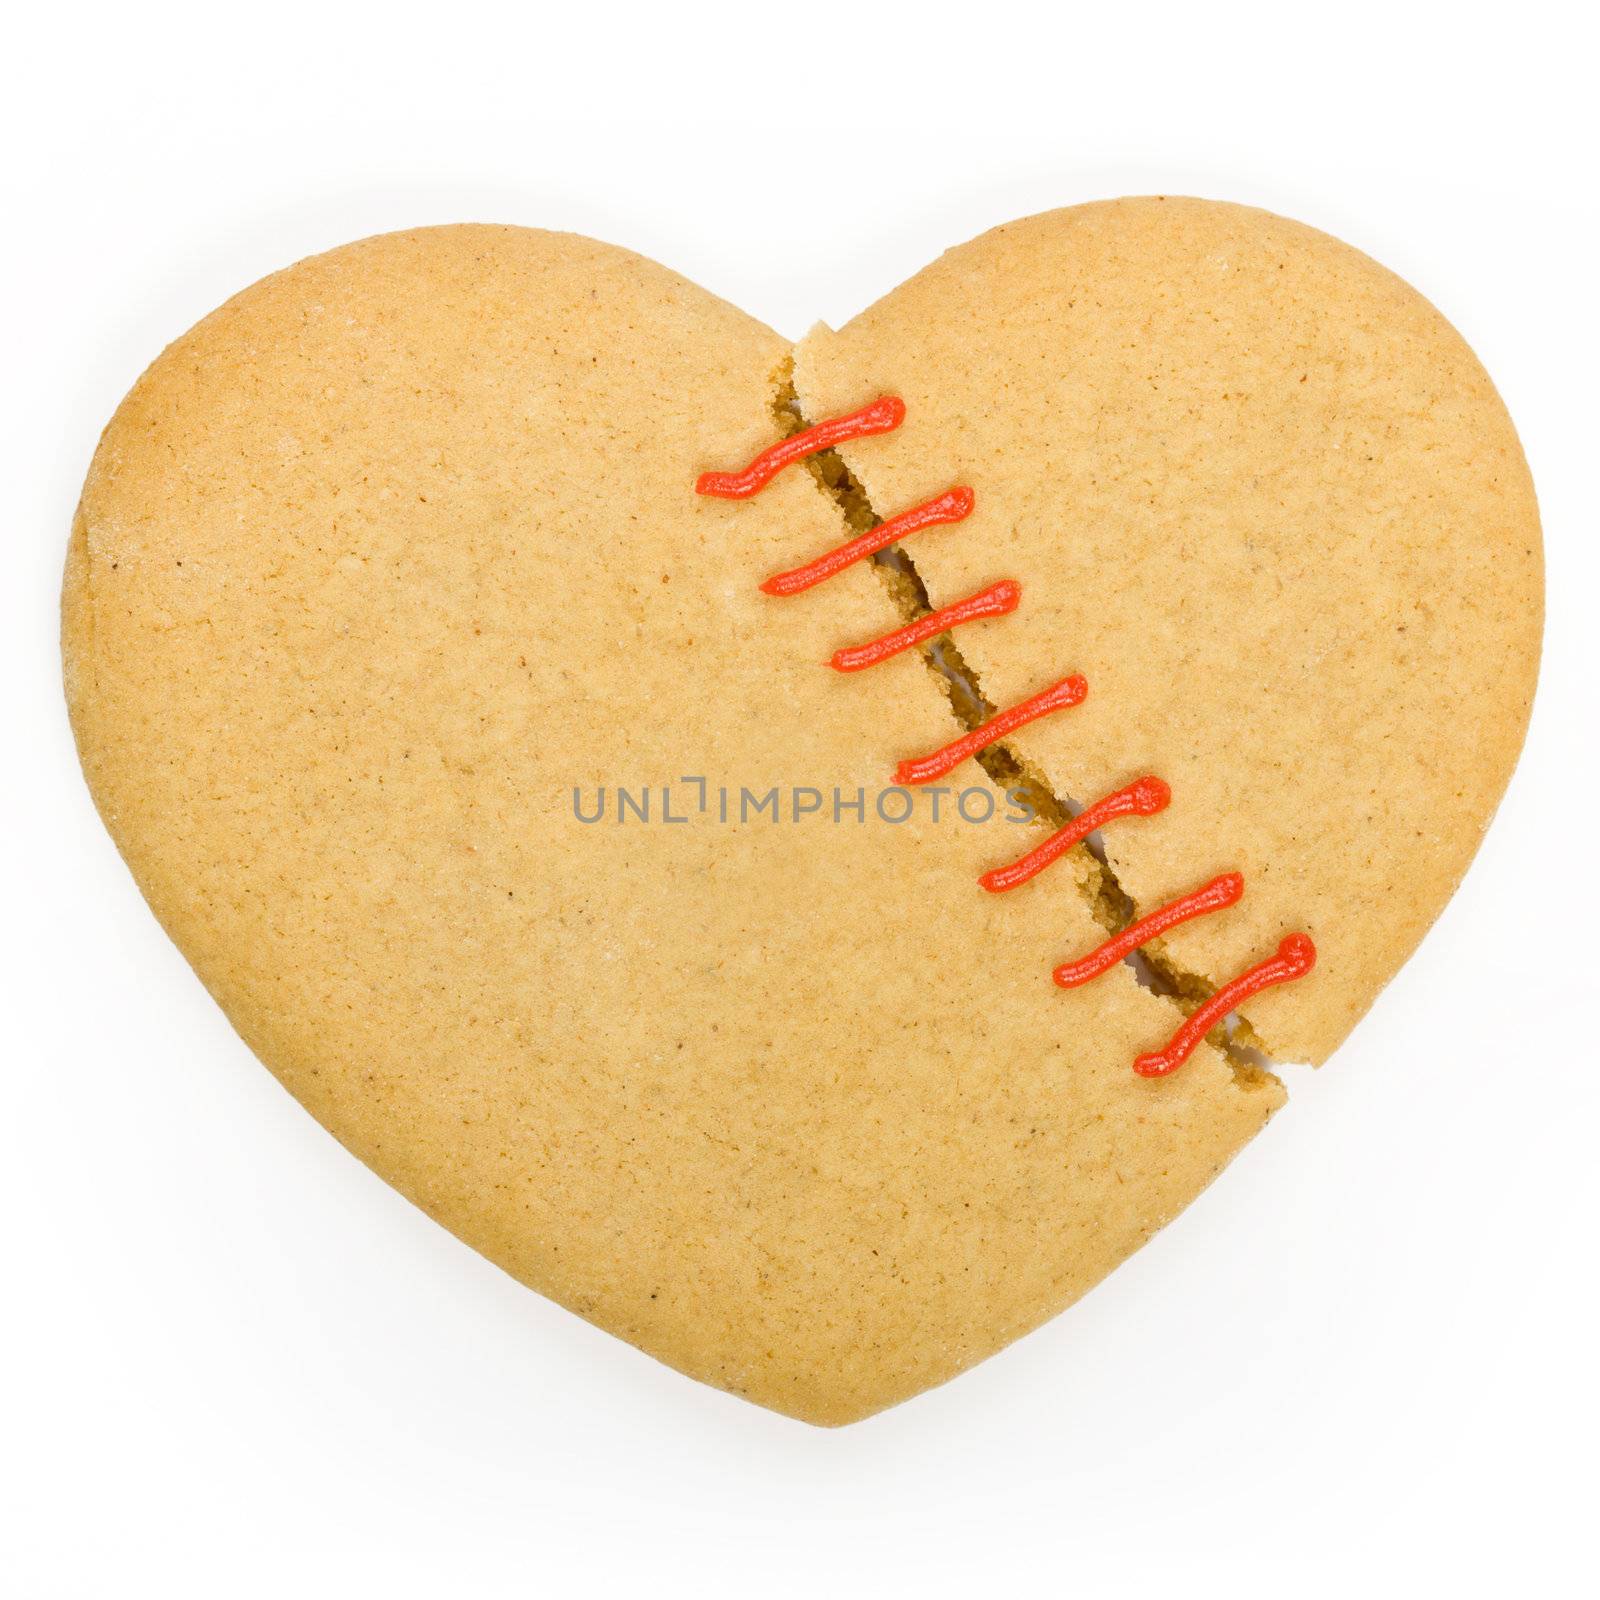 Gingerbread cookie in the shape of a broken heart